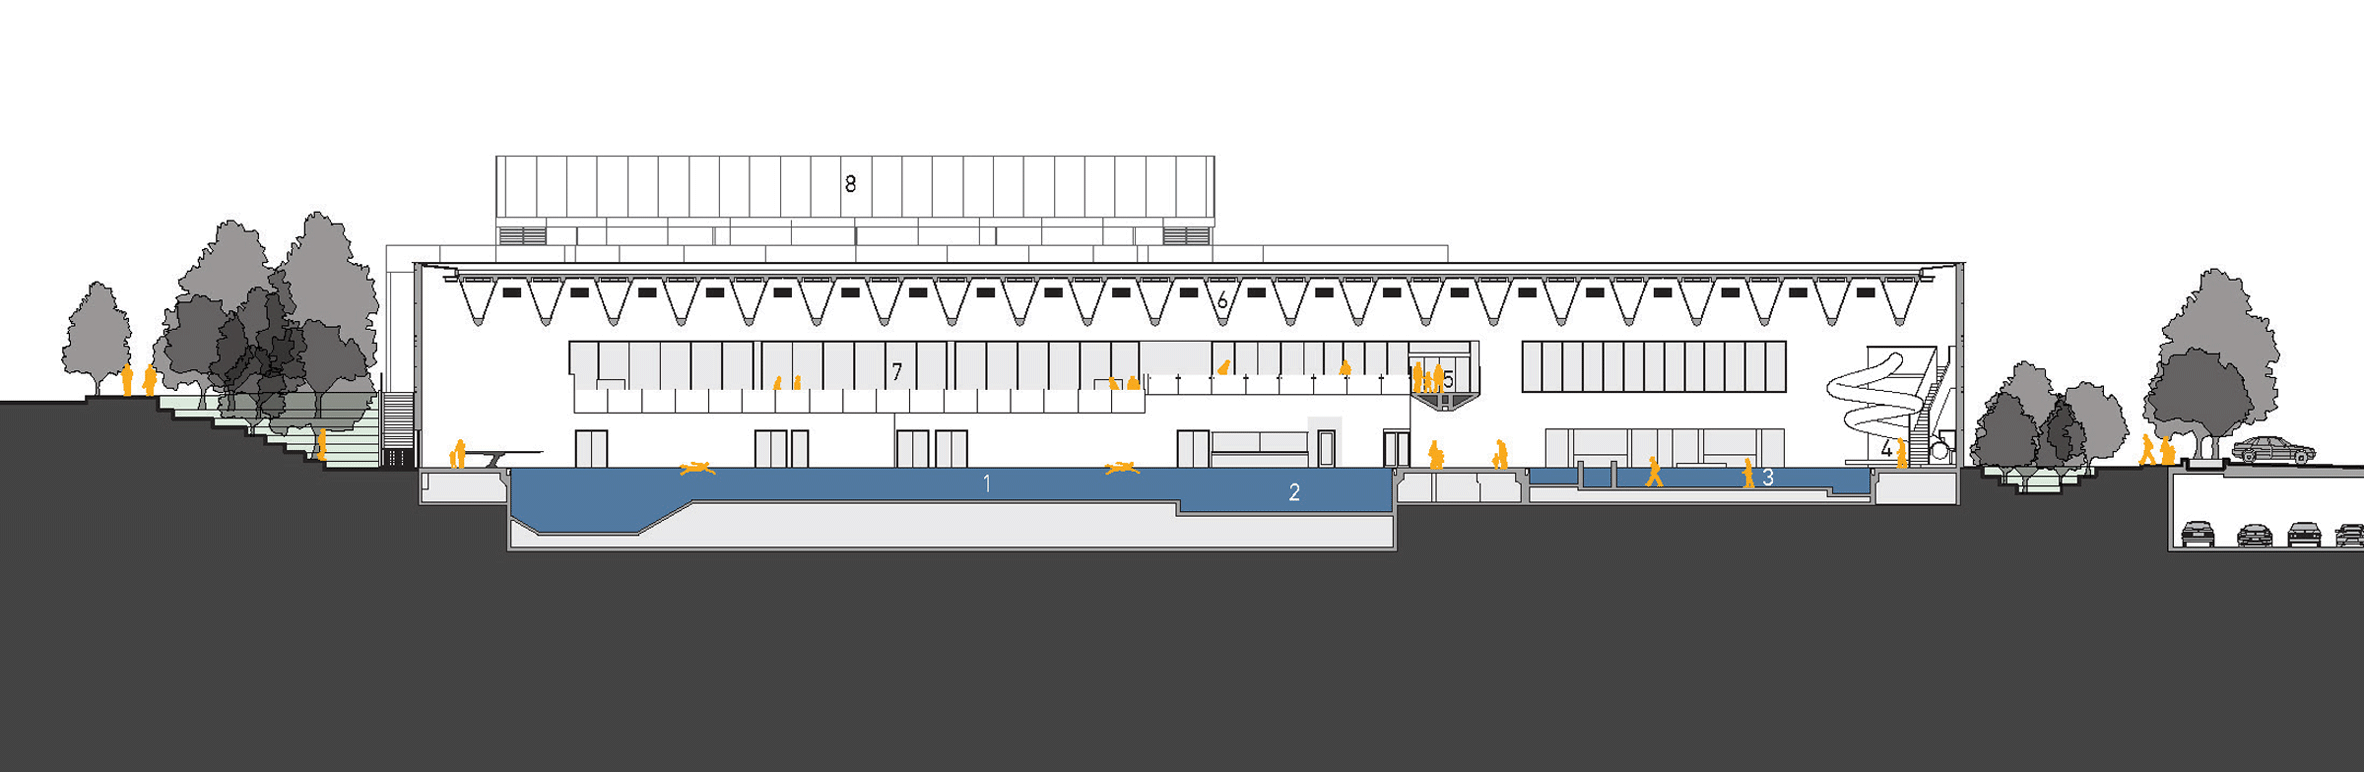 Guilford Aquatics Centre by Bing Thom Architects